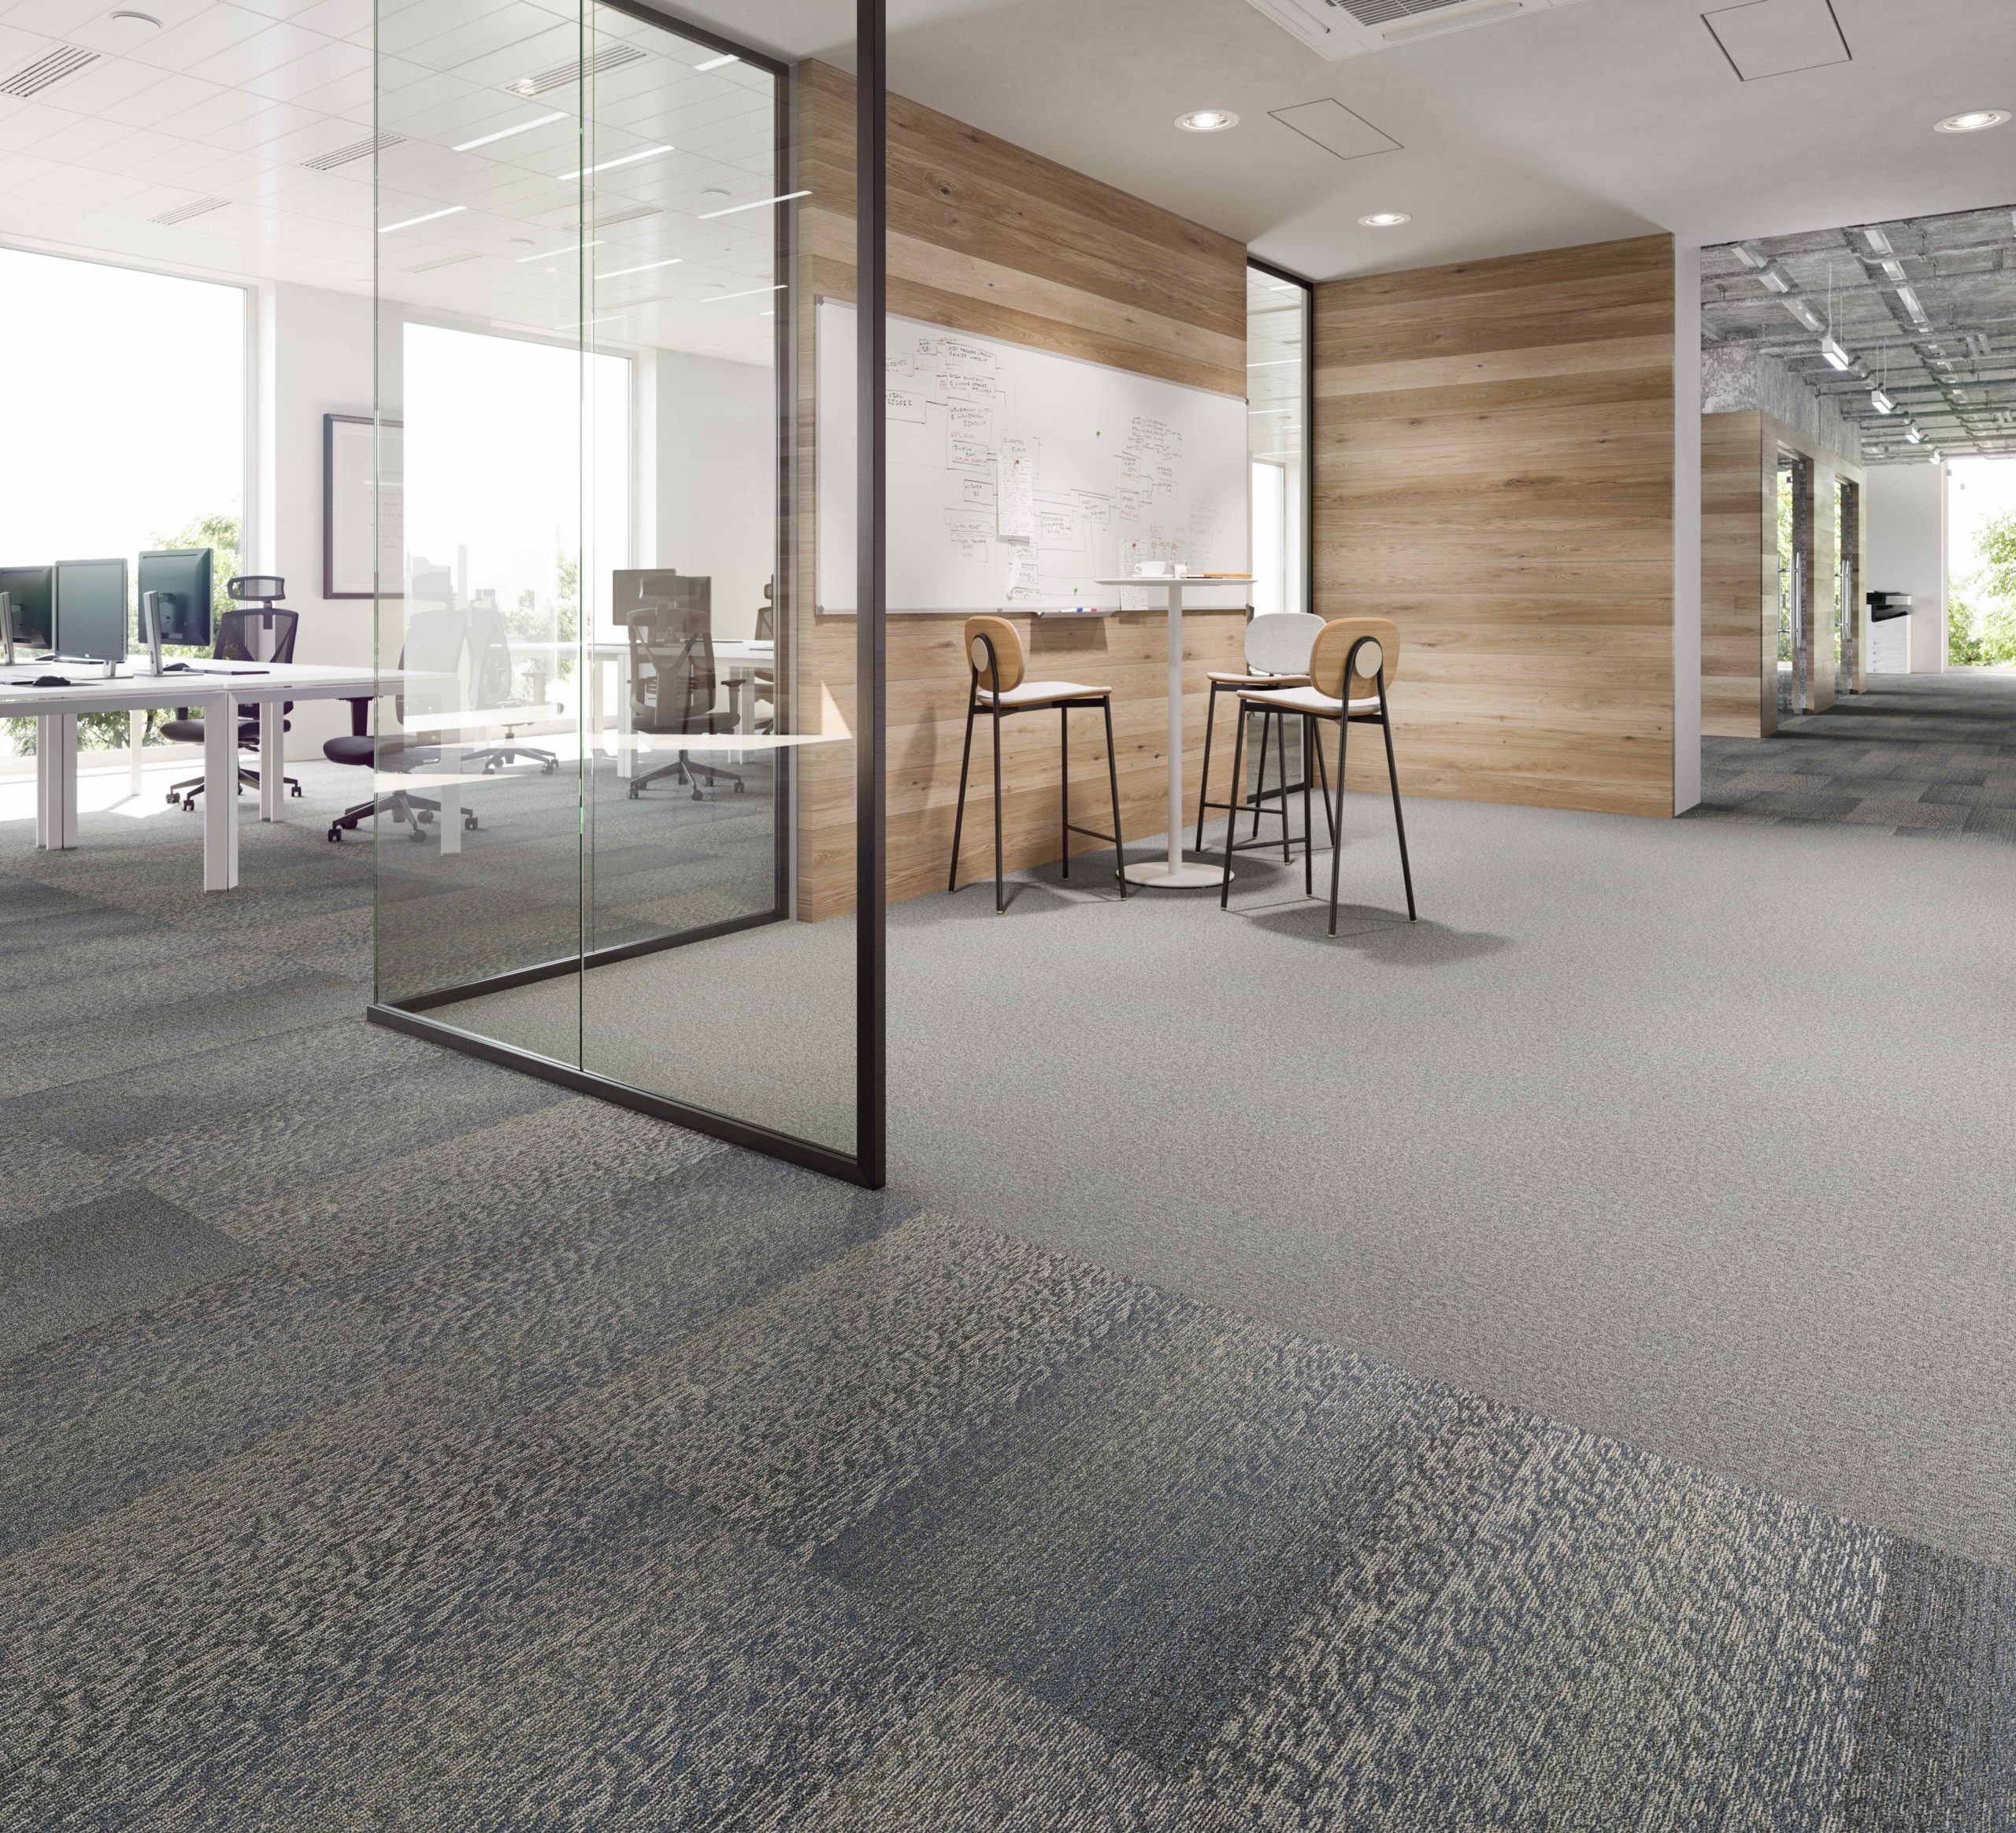 Mannington Commercial Launches Automata Carpet Collection Floor Ering News